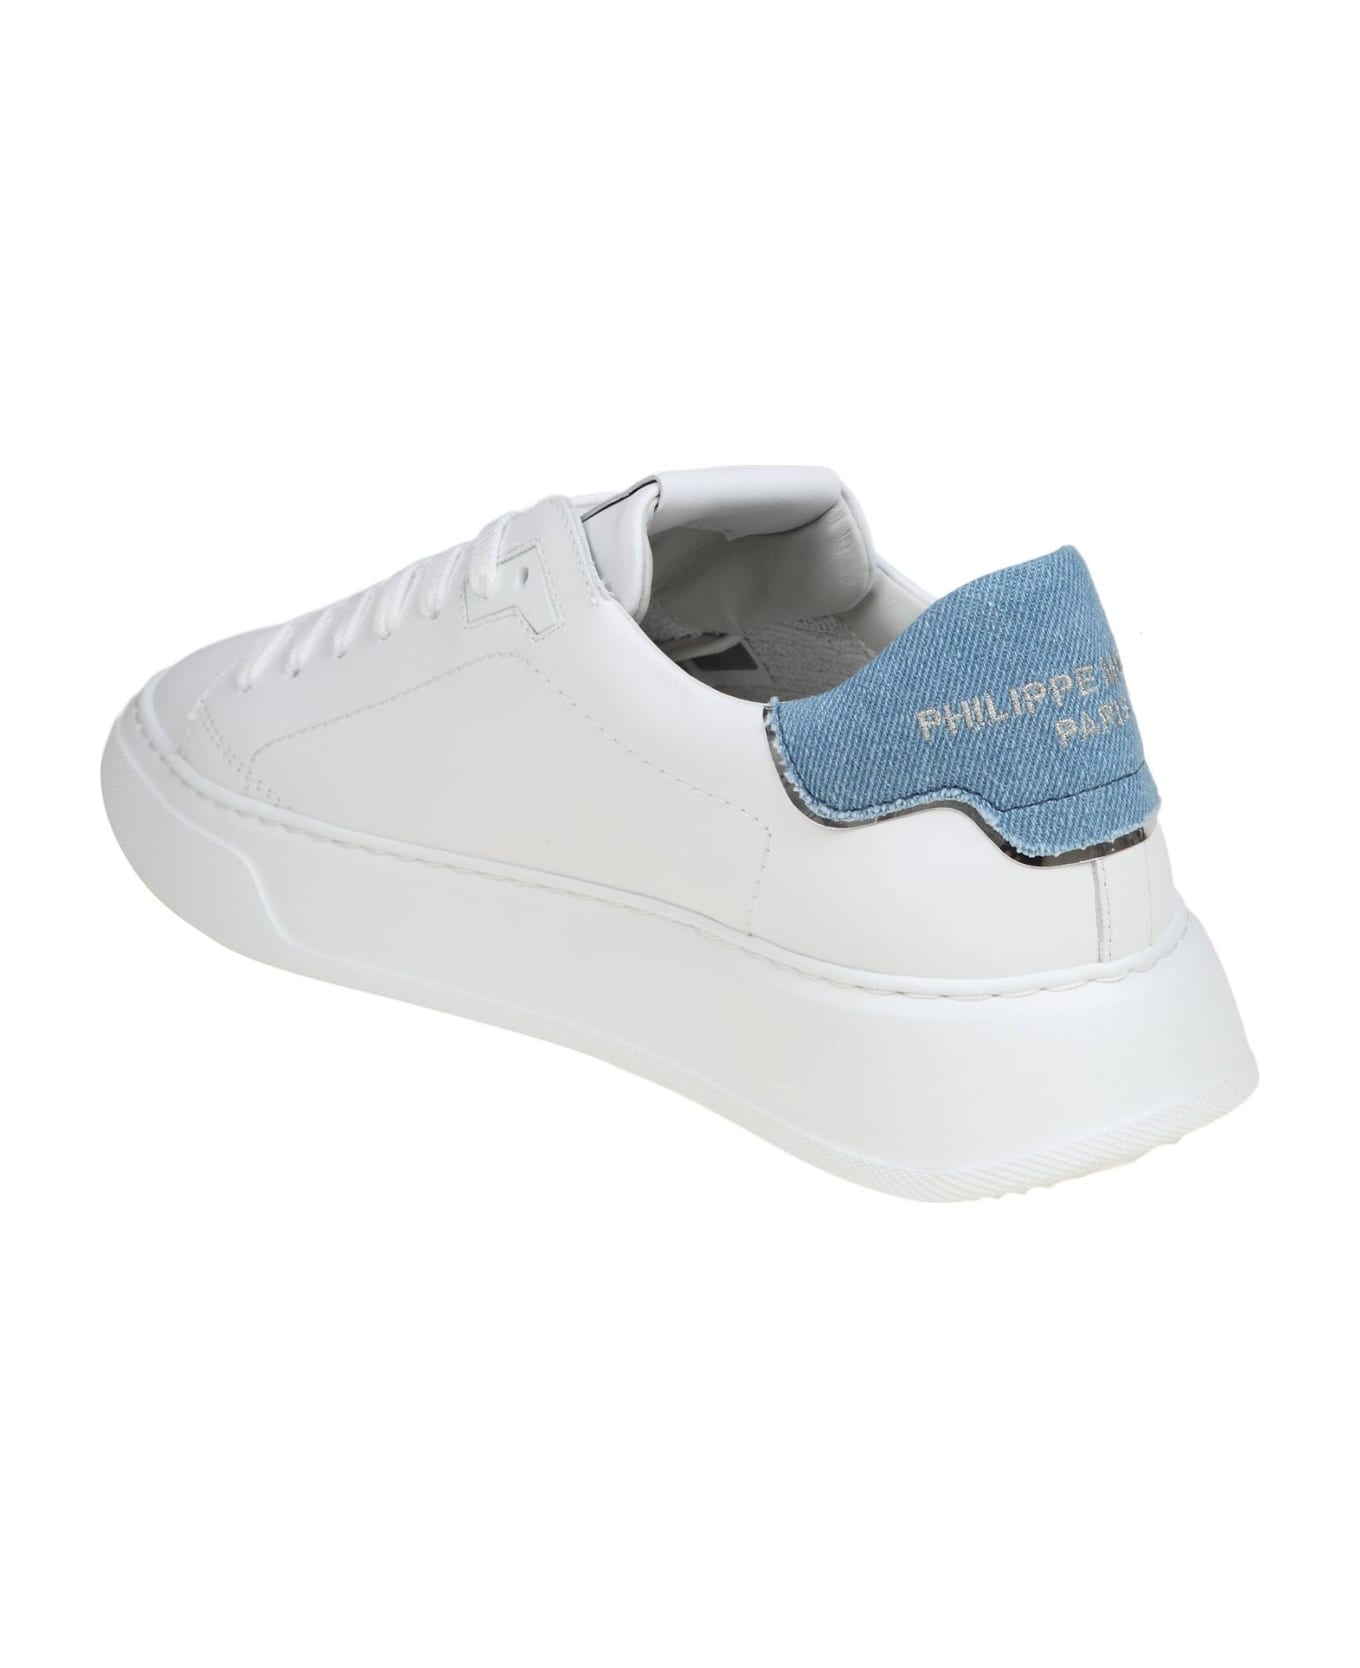 Philippe Model Temple Sneakers In White/blue Leather - WHITE/BLUETTE